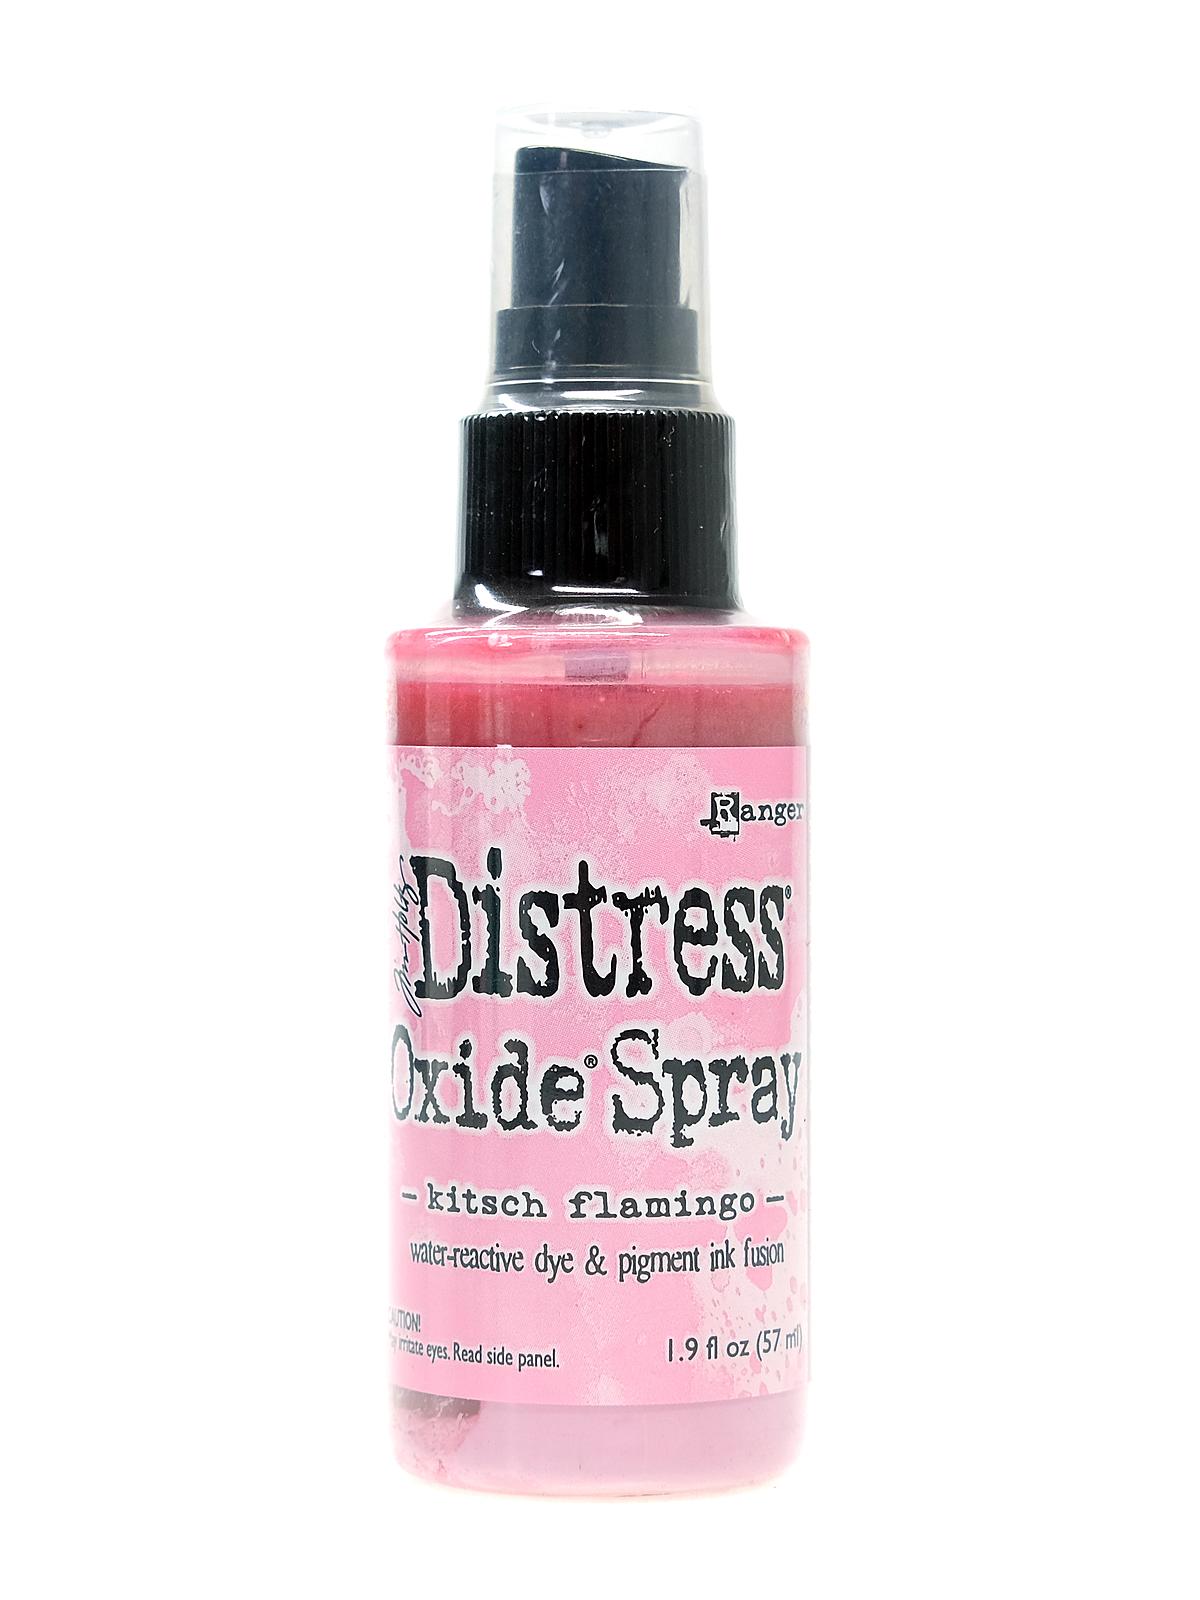 Tim Holtz Distress Oxide Sprays Kitsch Flamingo 2 Oz. Bottle